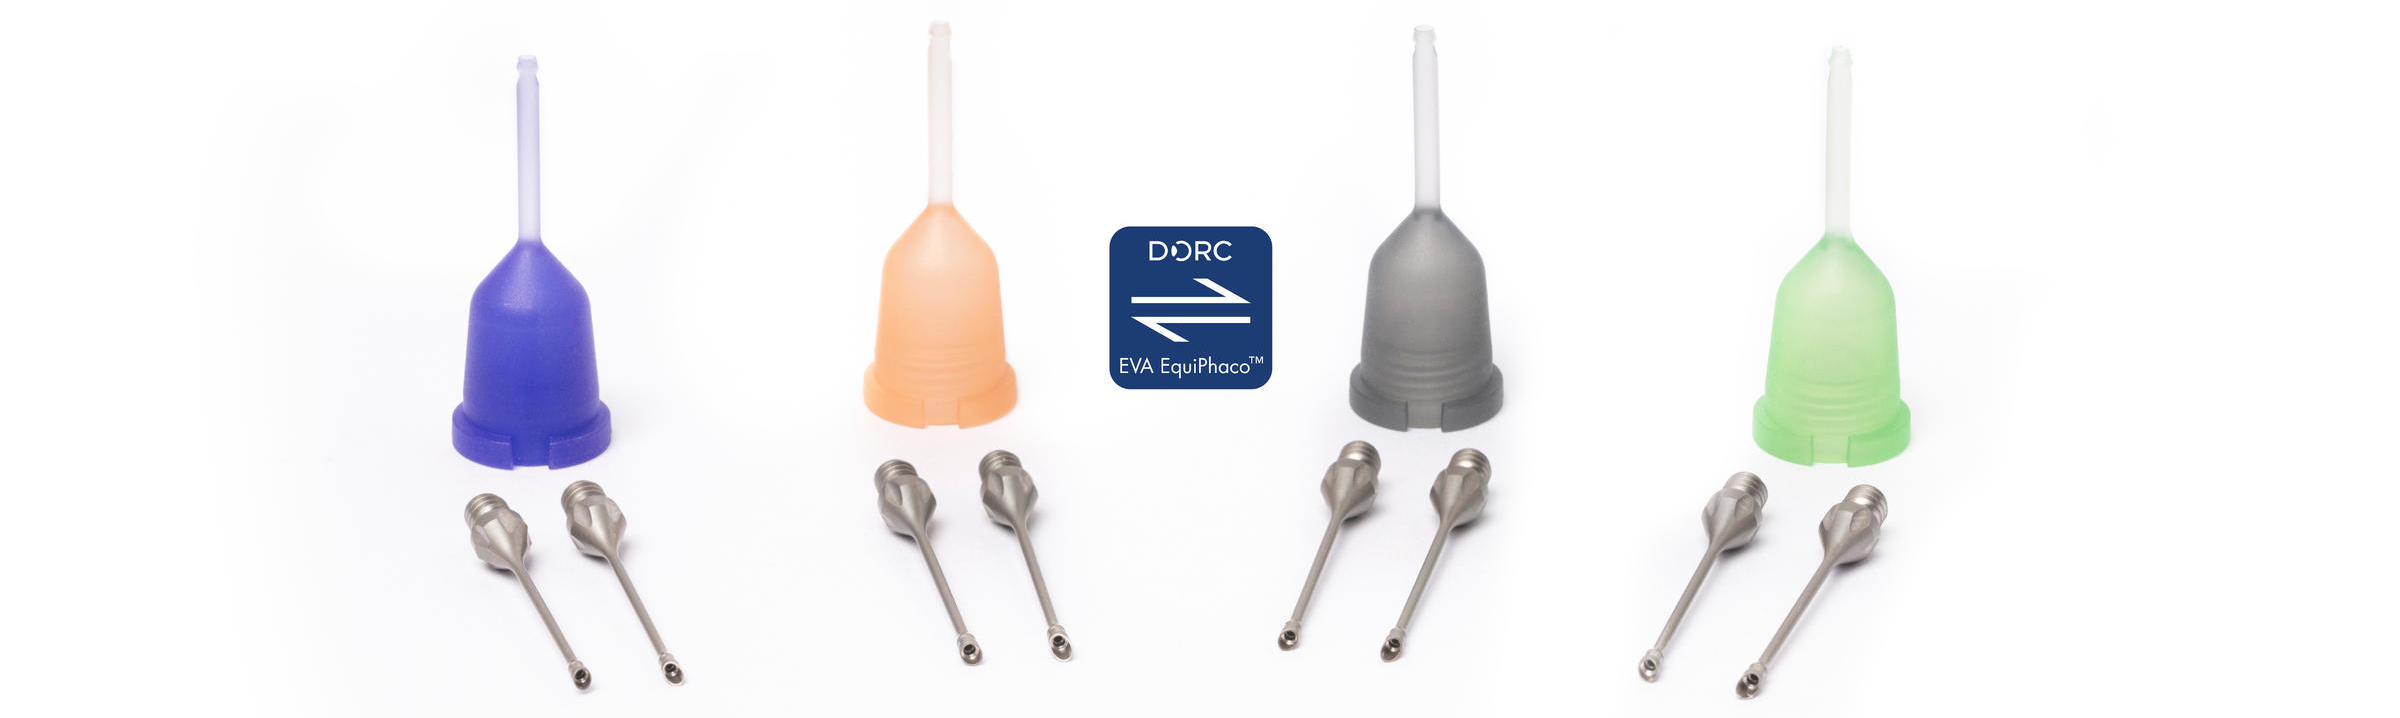 DORC launches new range of EVA EquiPhaco™ needles and sleeves